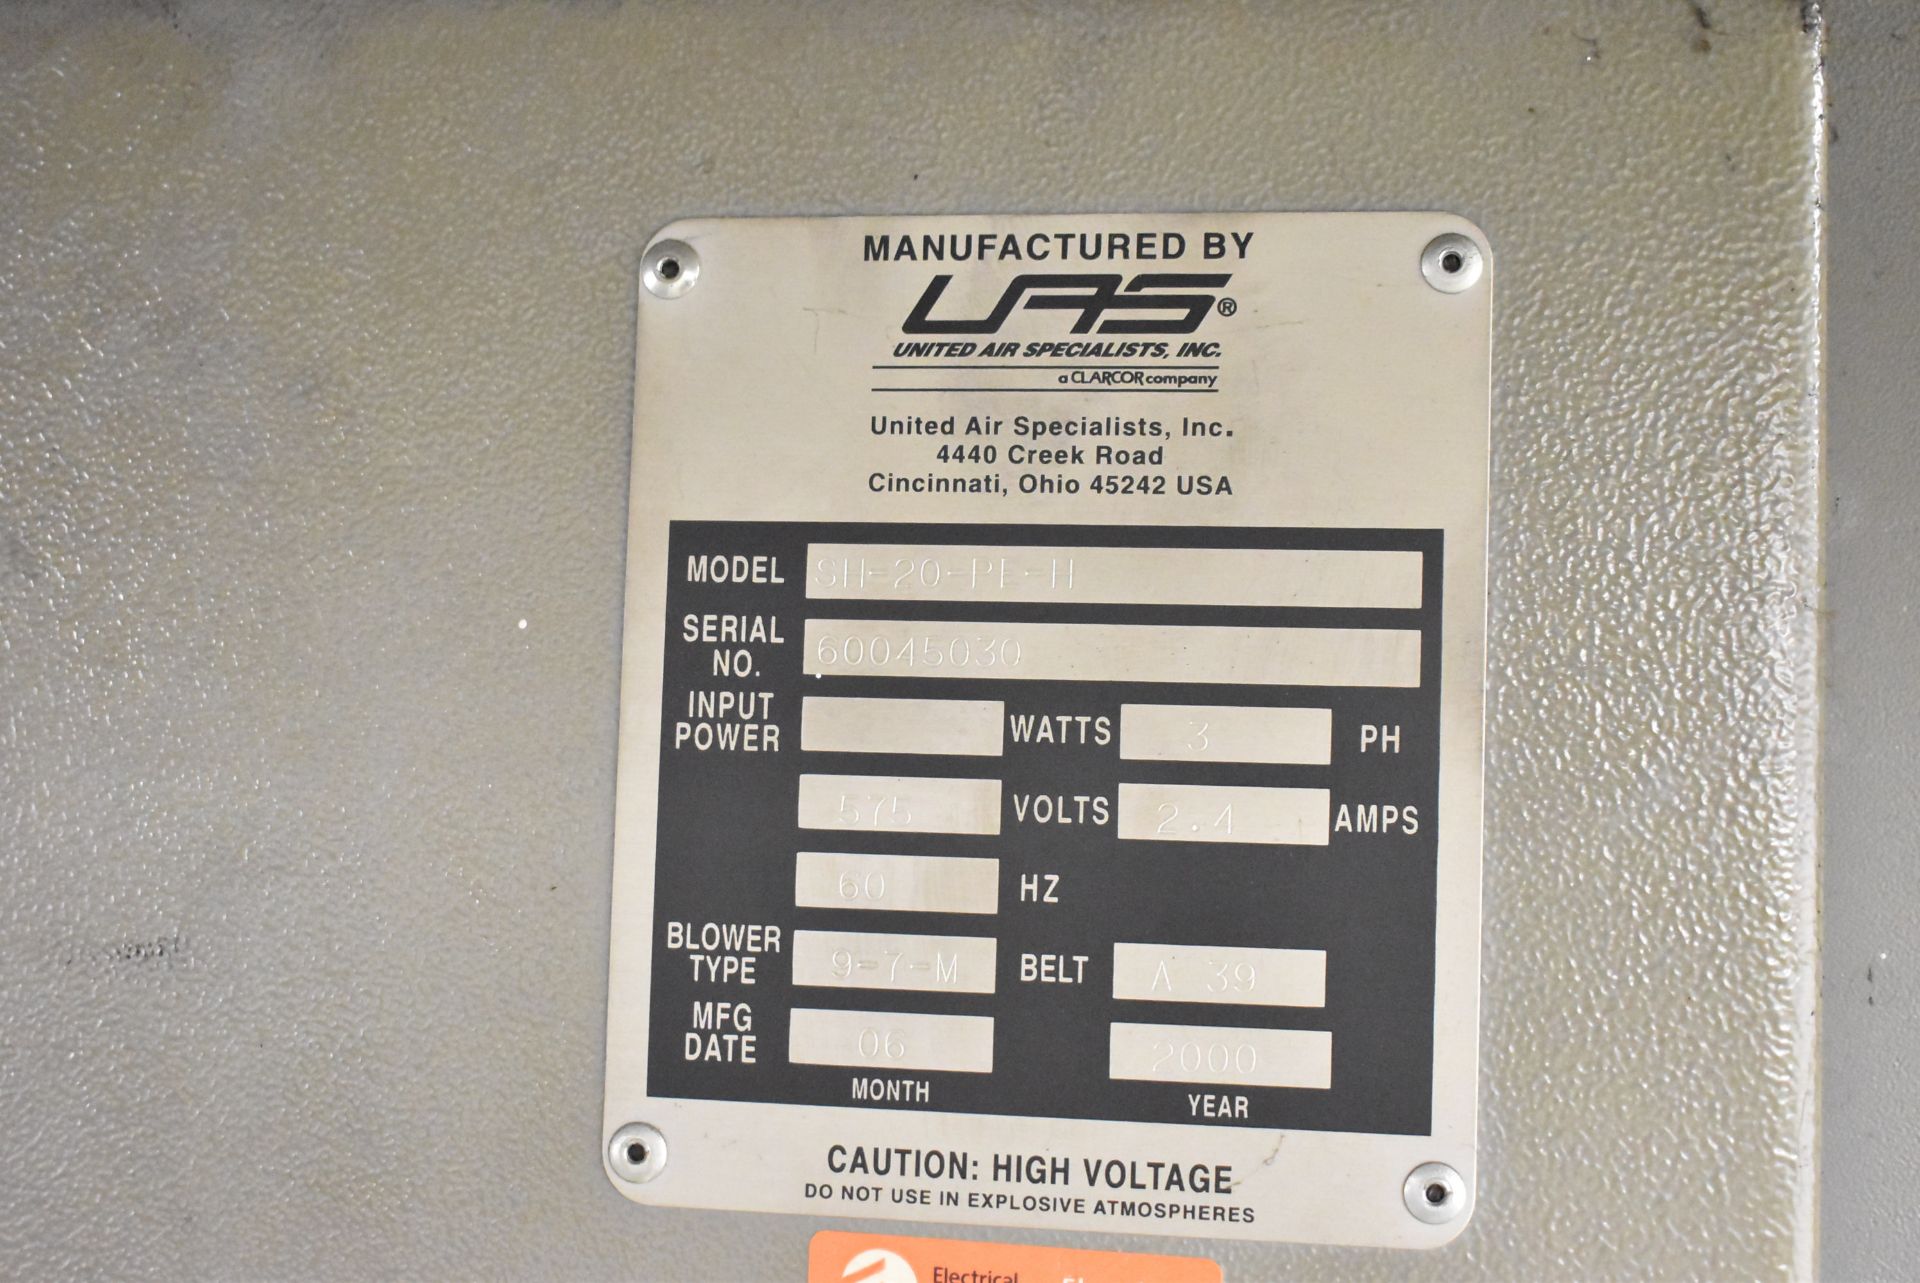 UAS (2000) SH-20-PE-H SMOG-HOG MIST COLLECTOR WITH 9-7-M BLOWER, 575V/3PH/60HZ, S/N 60045030 (CI)[ - Image 3 of 3